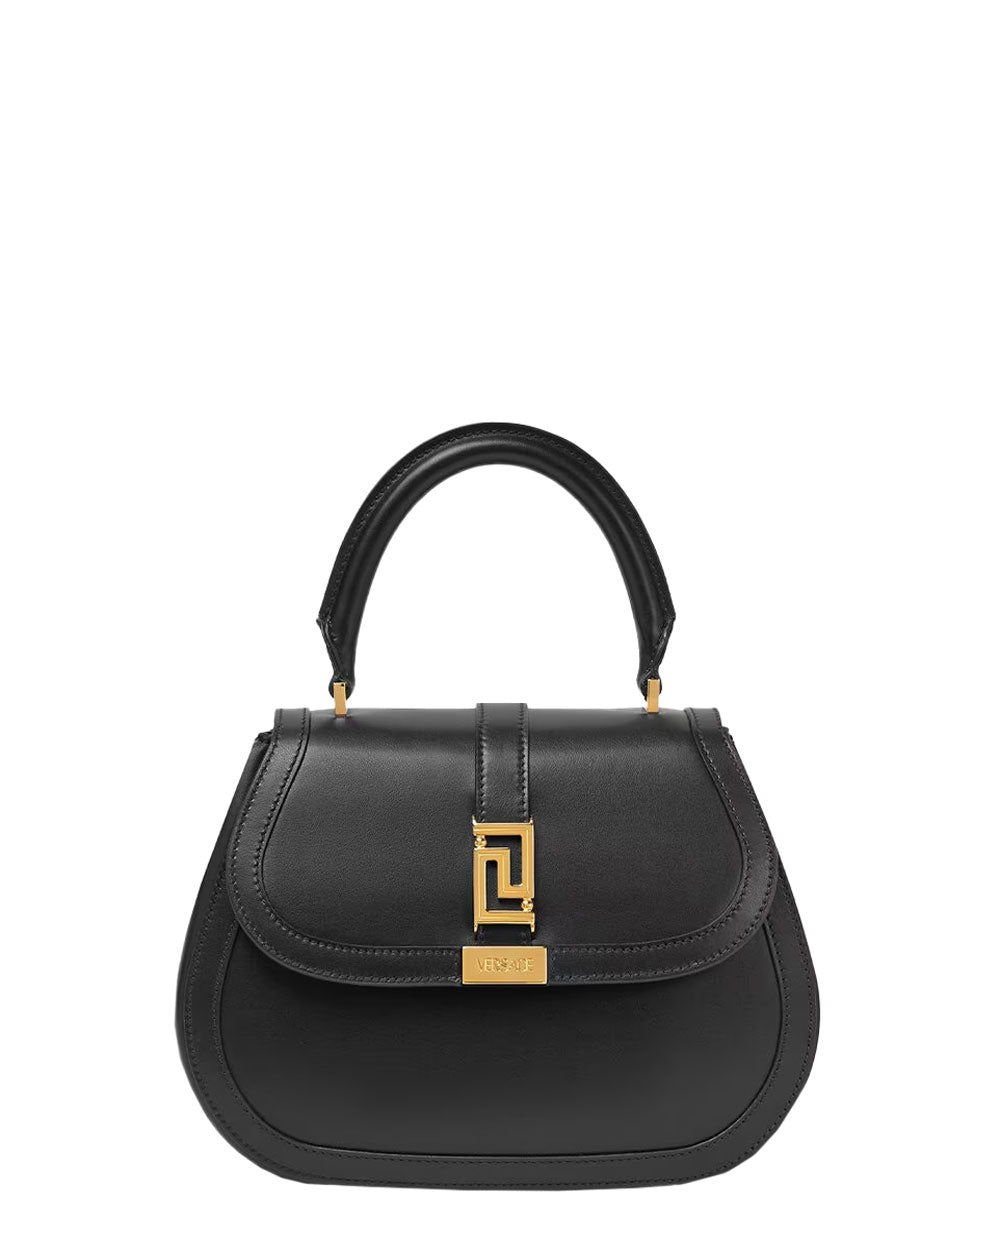 Greca Goddess Top Handle Bag in Black